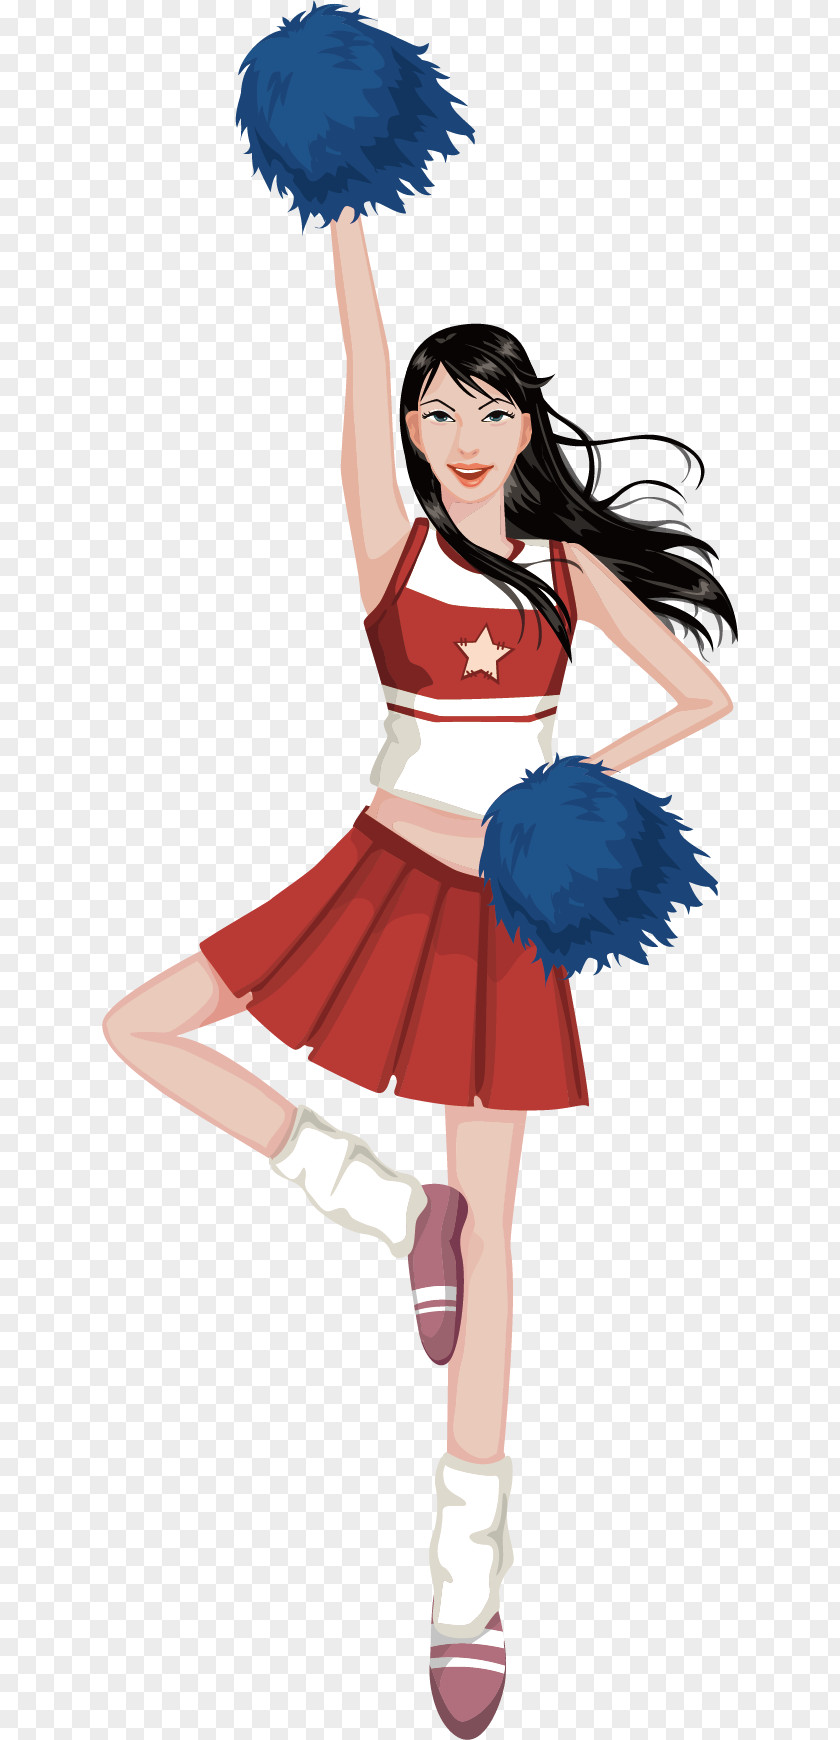 Beauty Cheerleaders Cheerleader Illustration PNG